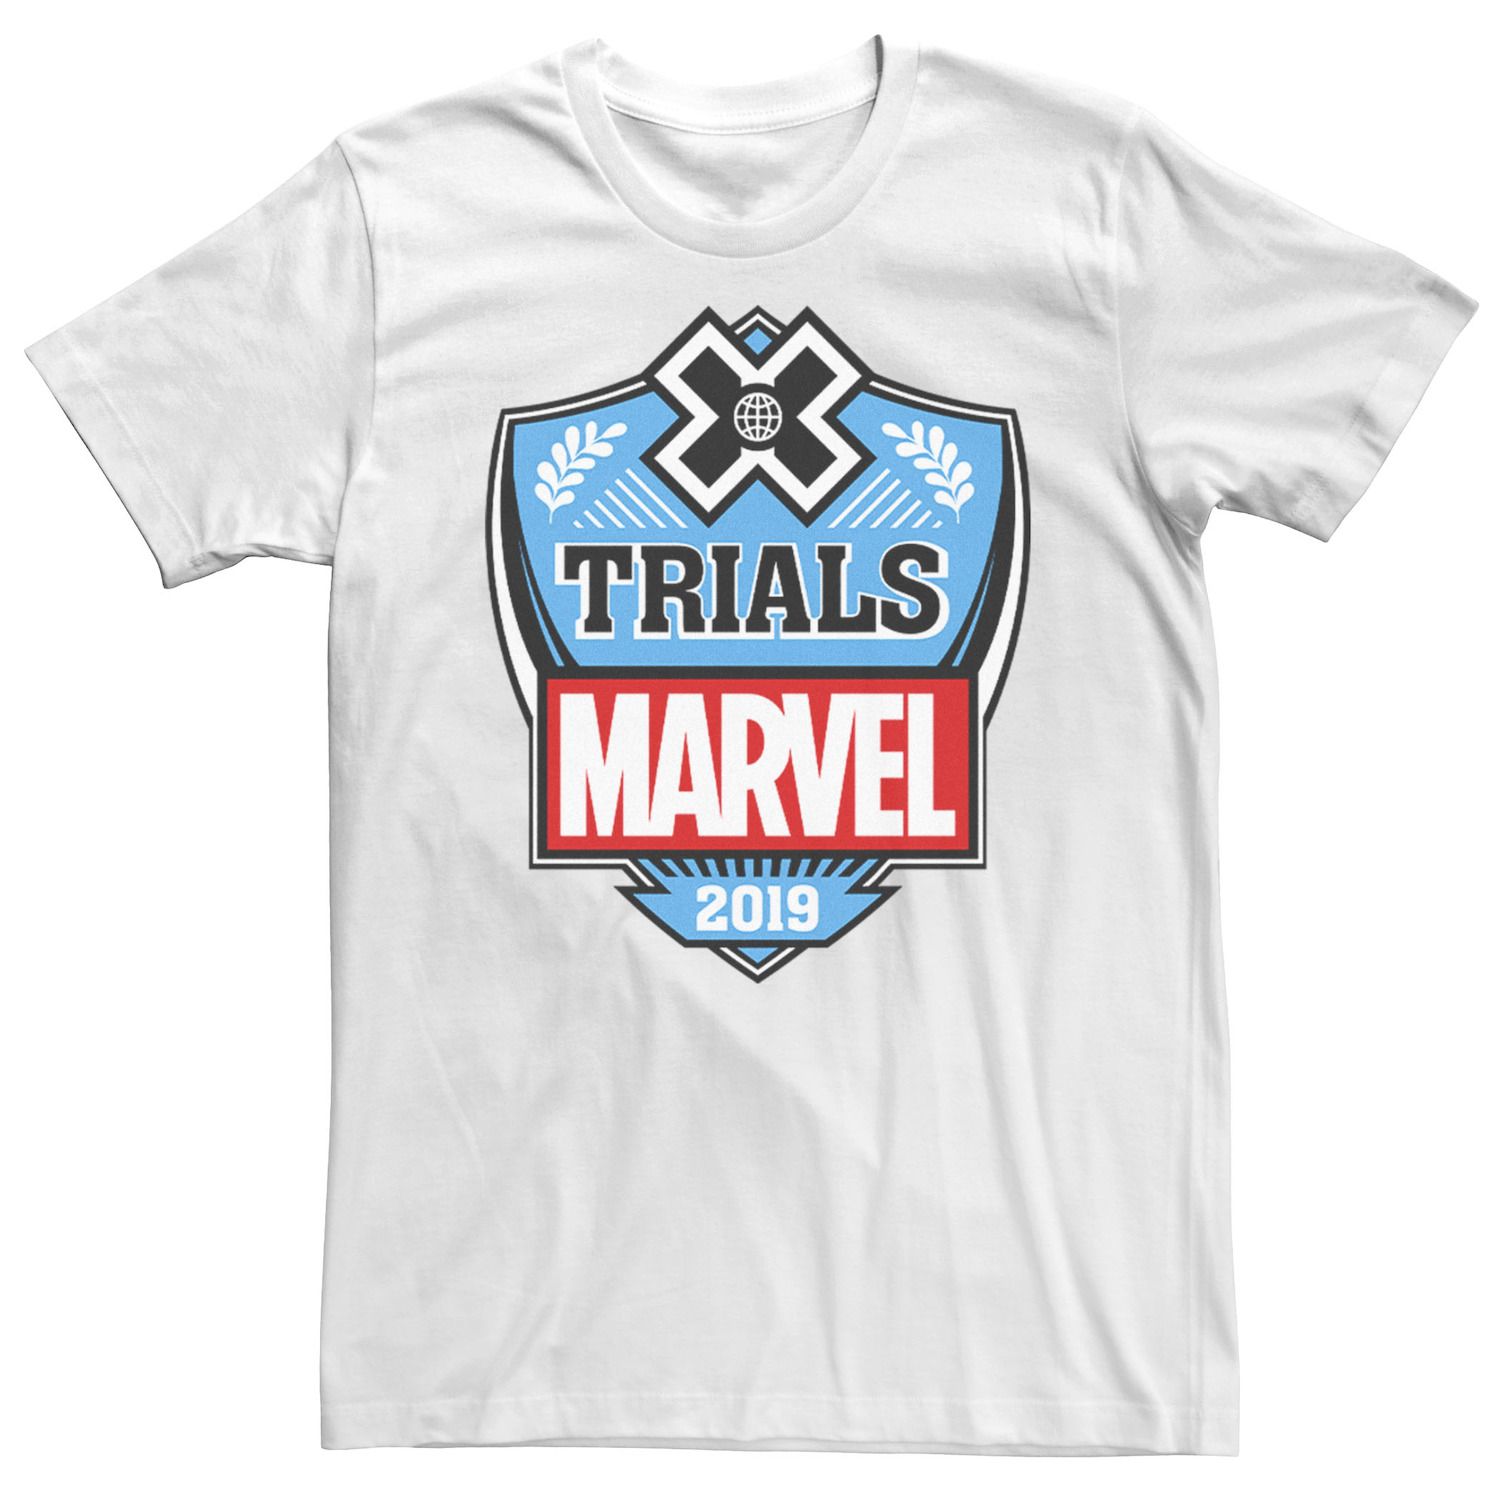 Мужская футболка Trials Marvel, белый trials rising